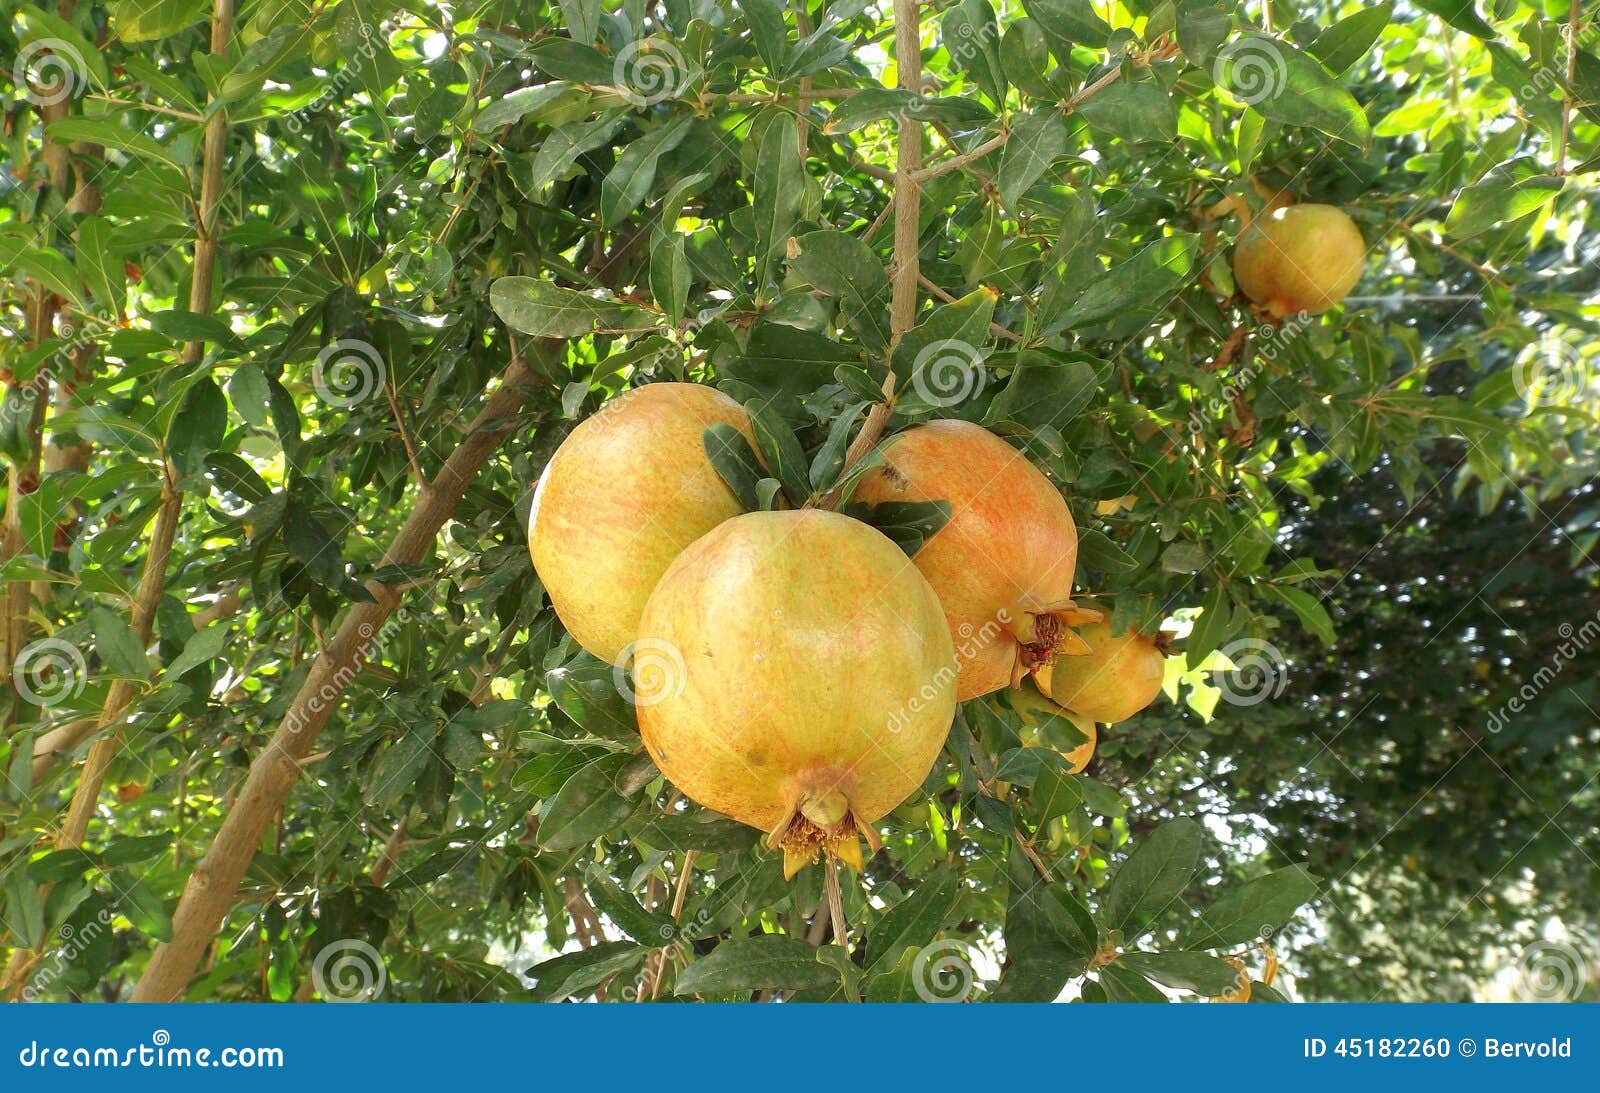 photo stock fruits de grenade dans l arbre image